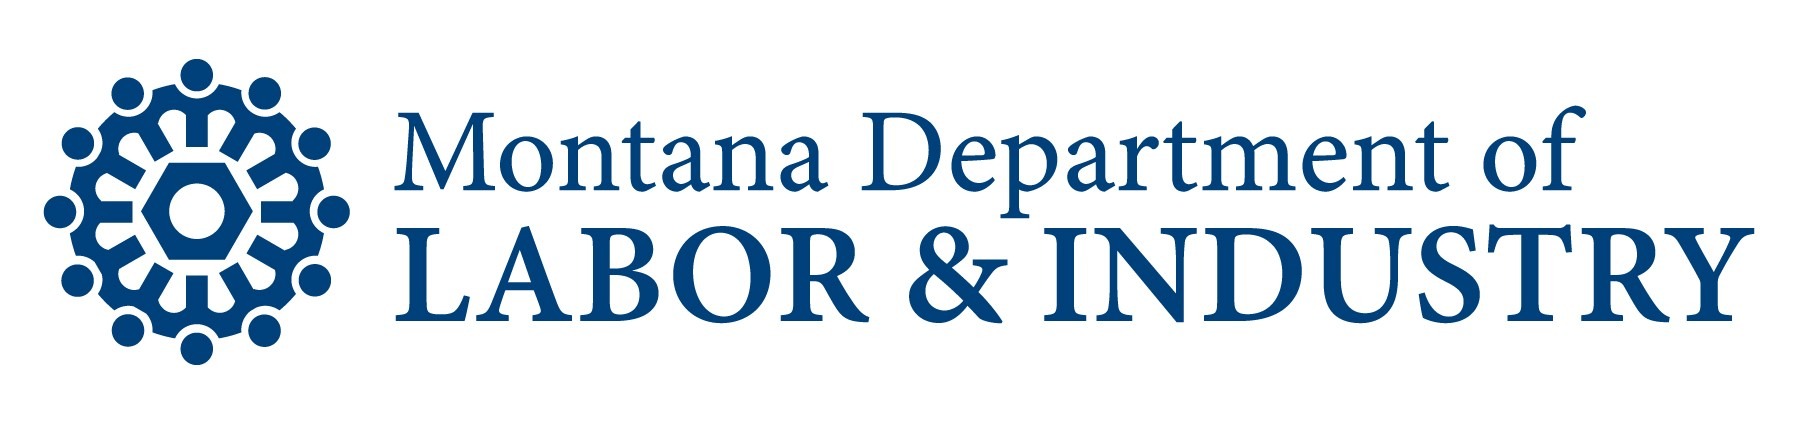 Montana DPLI logo.